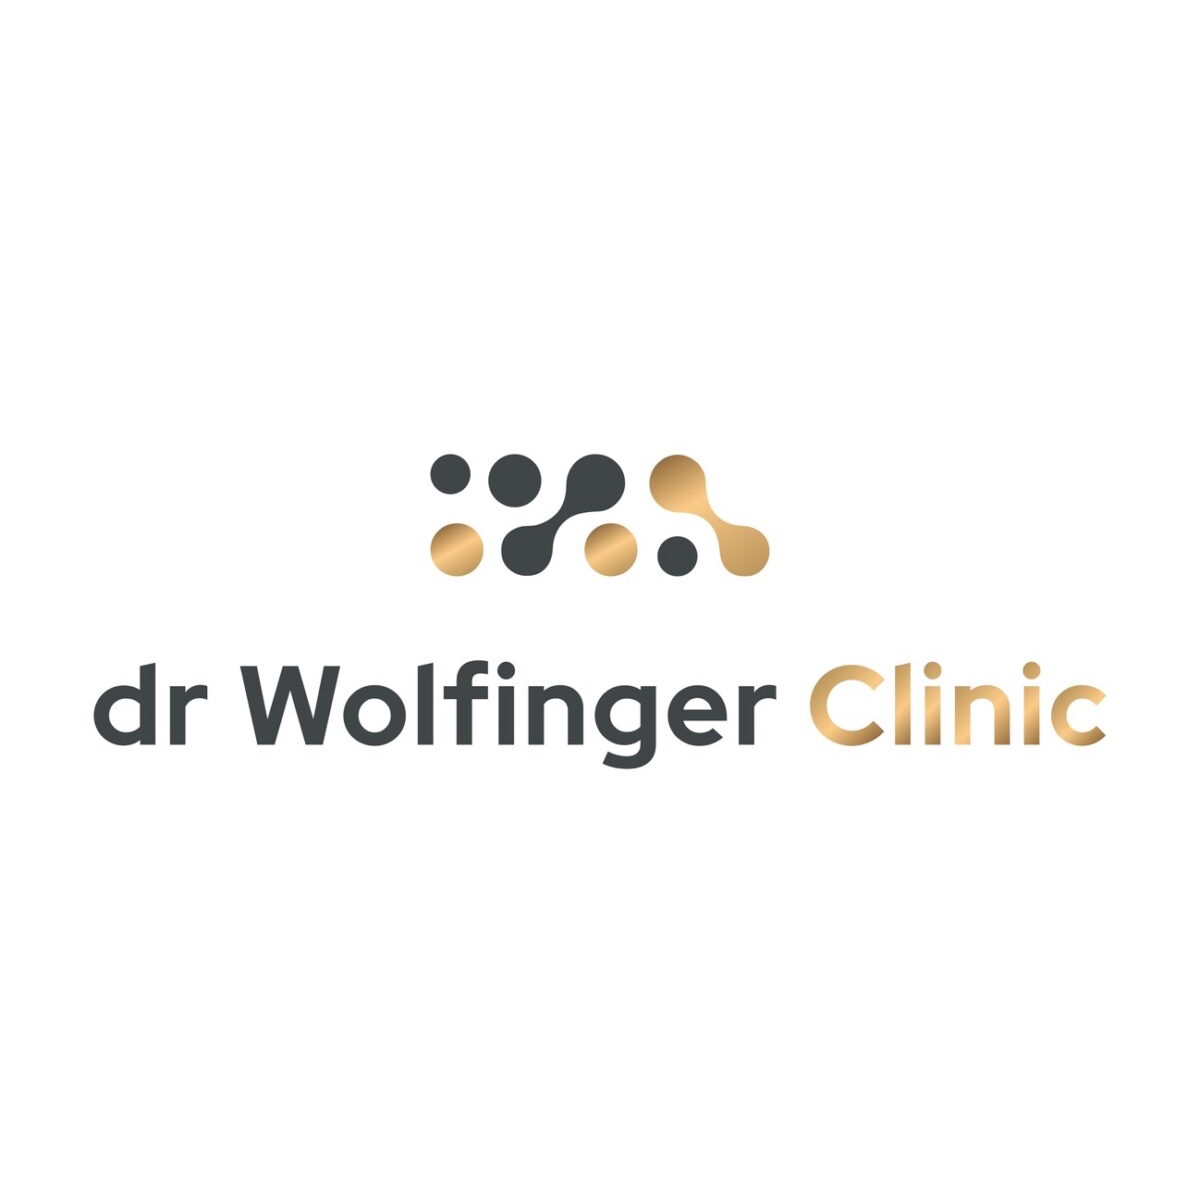 //drwolfingerclinic.pl/wp-content/uploads/2021/04/clinic-wolfinger-01-scaled-1.jpg